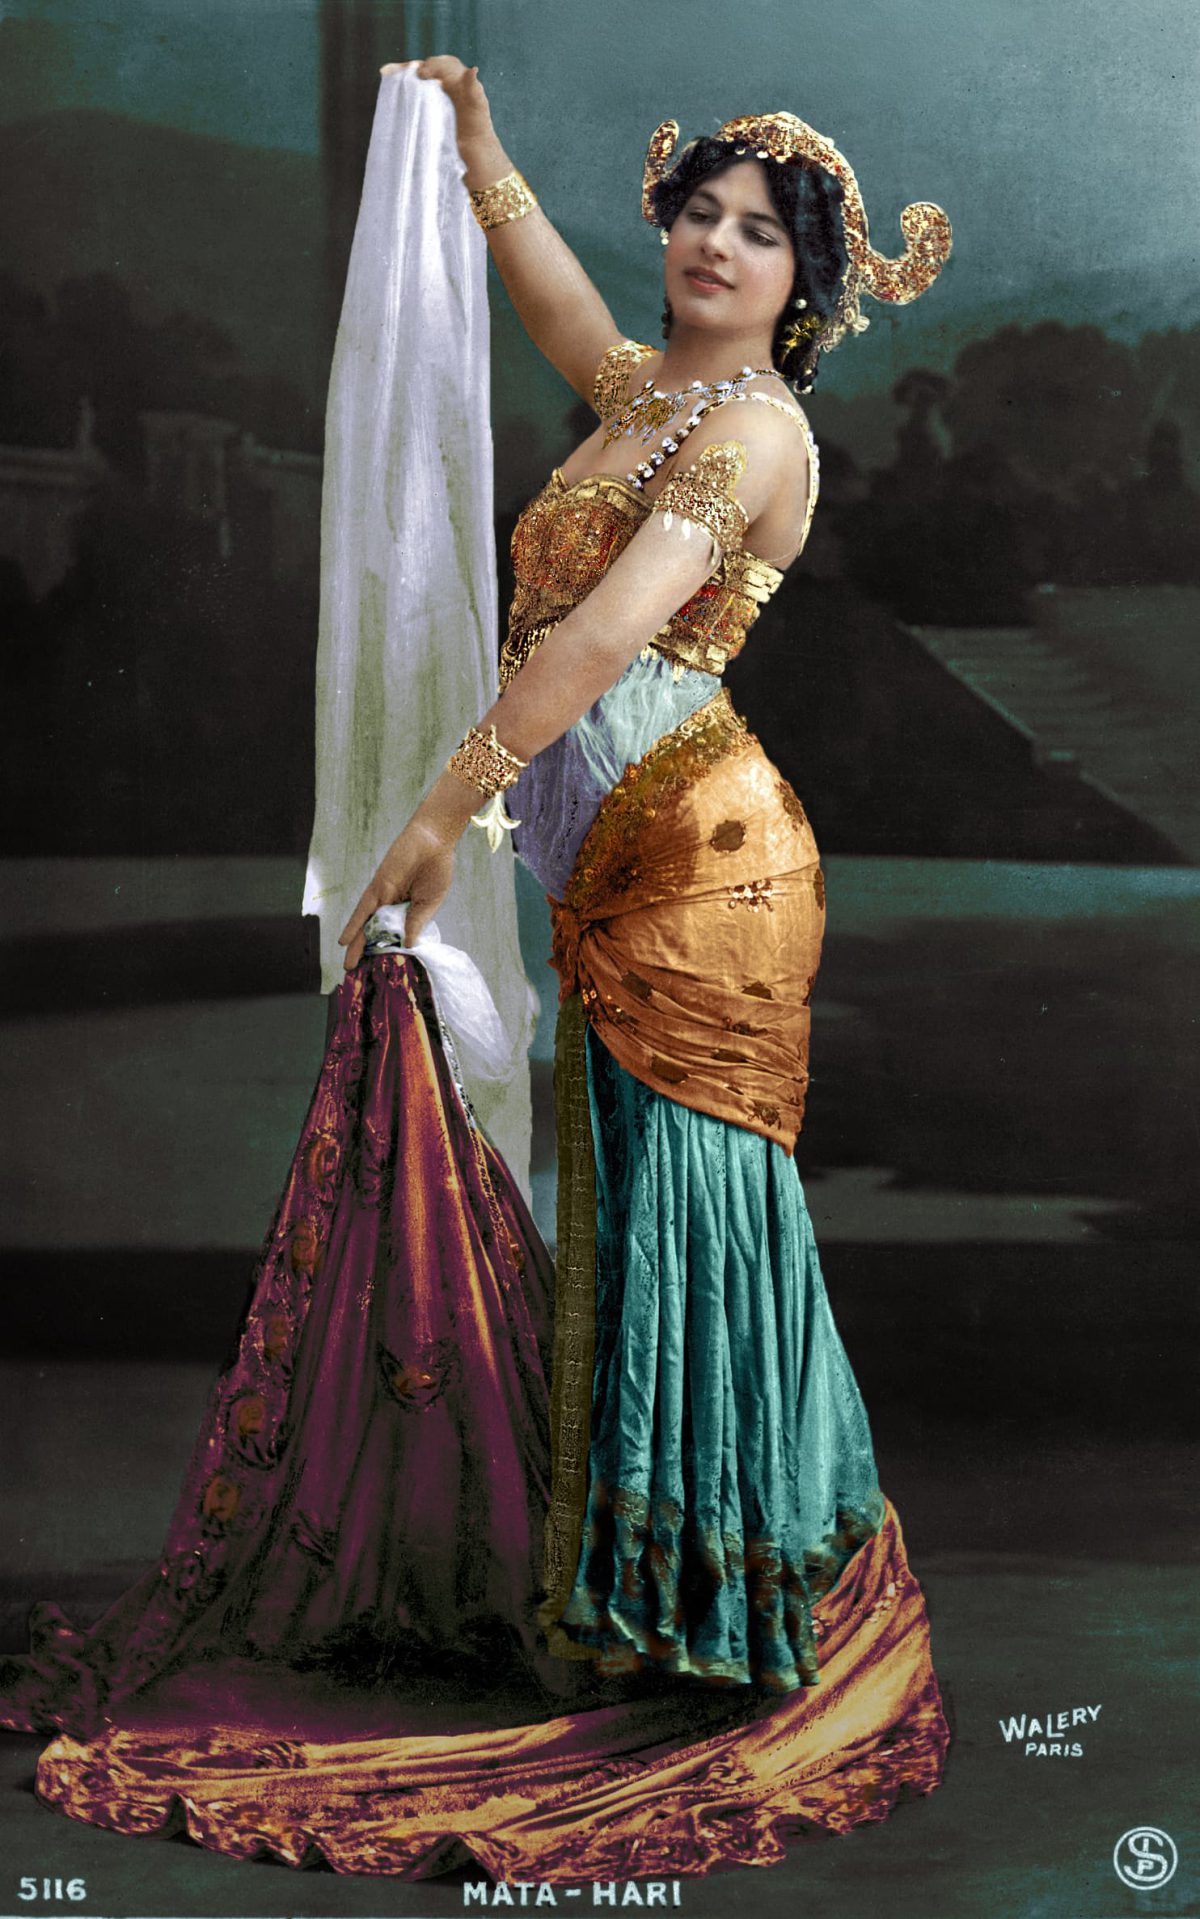 About the Film – Mata Hari